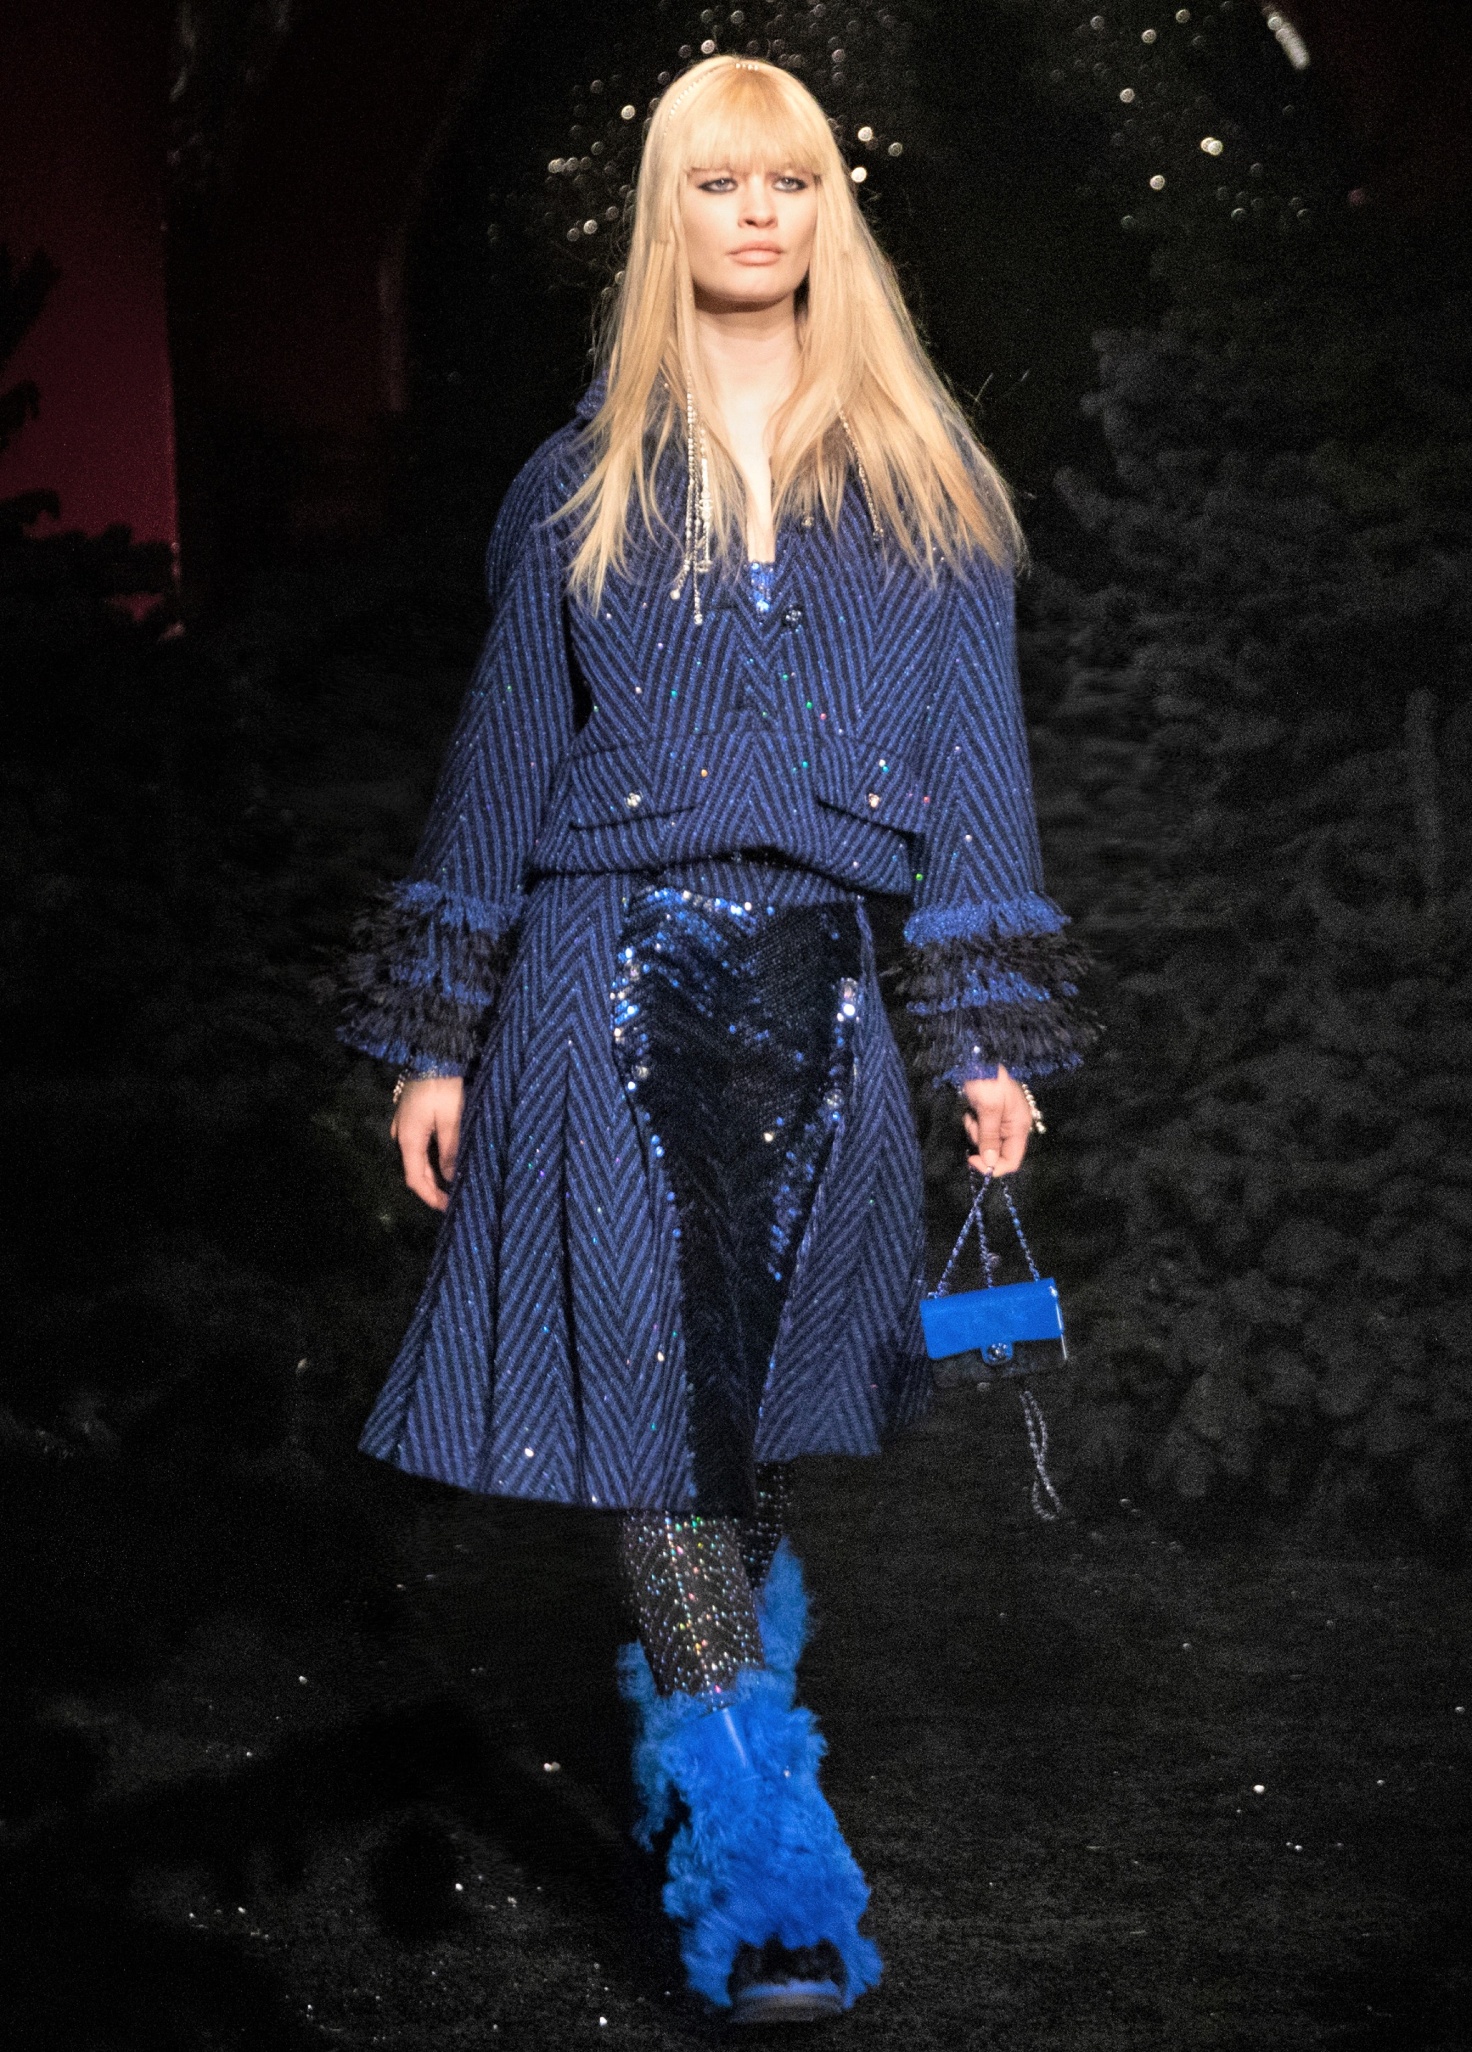 Chanel Paris 2 blue outfit vogue cropped.jpg